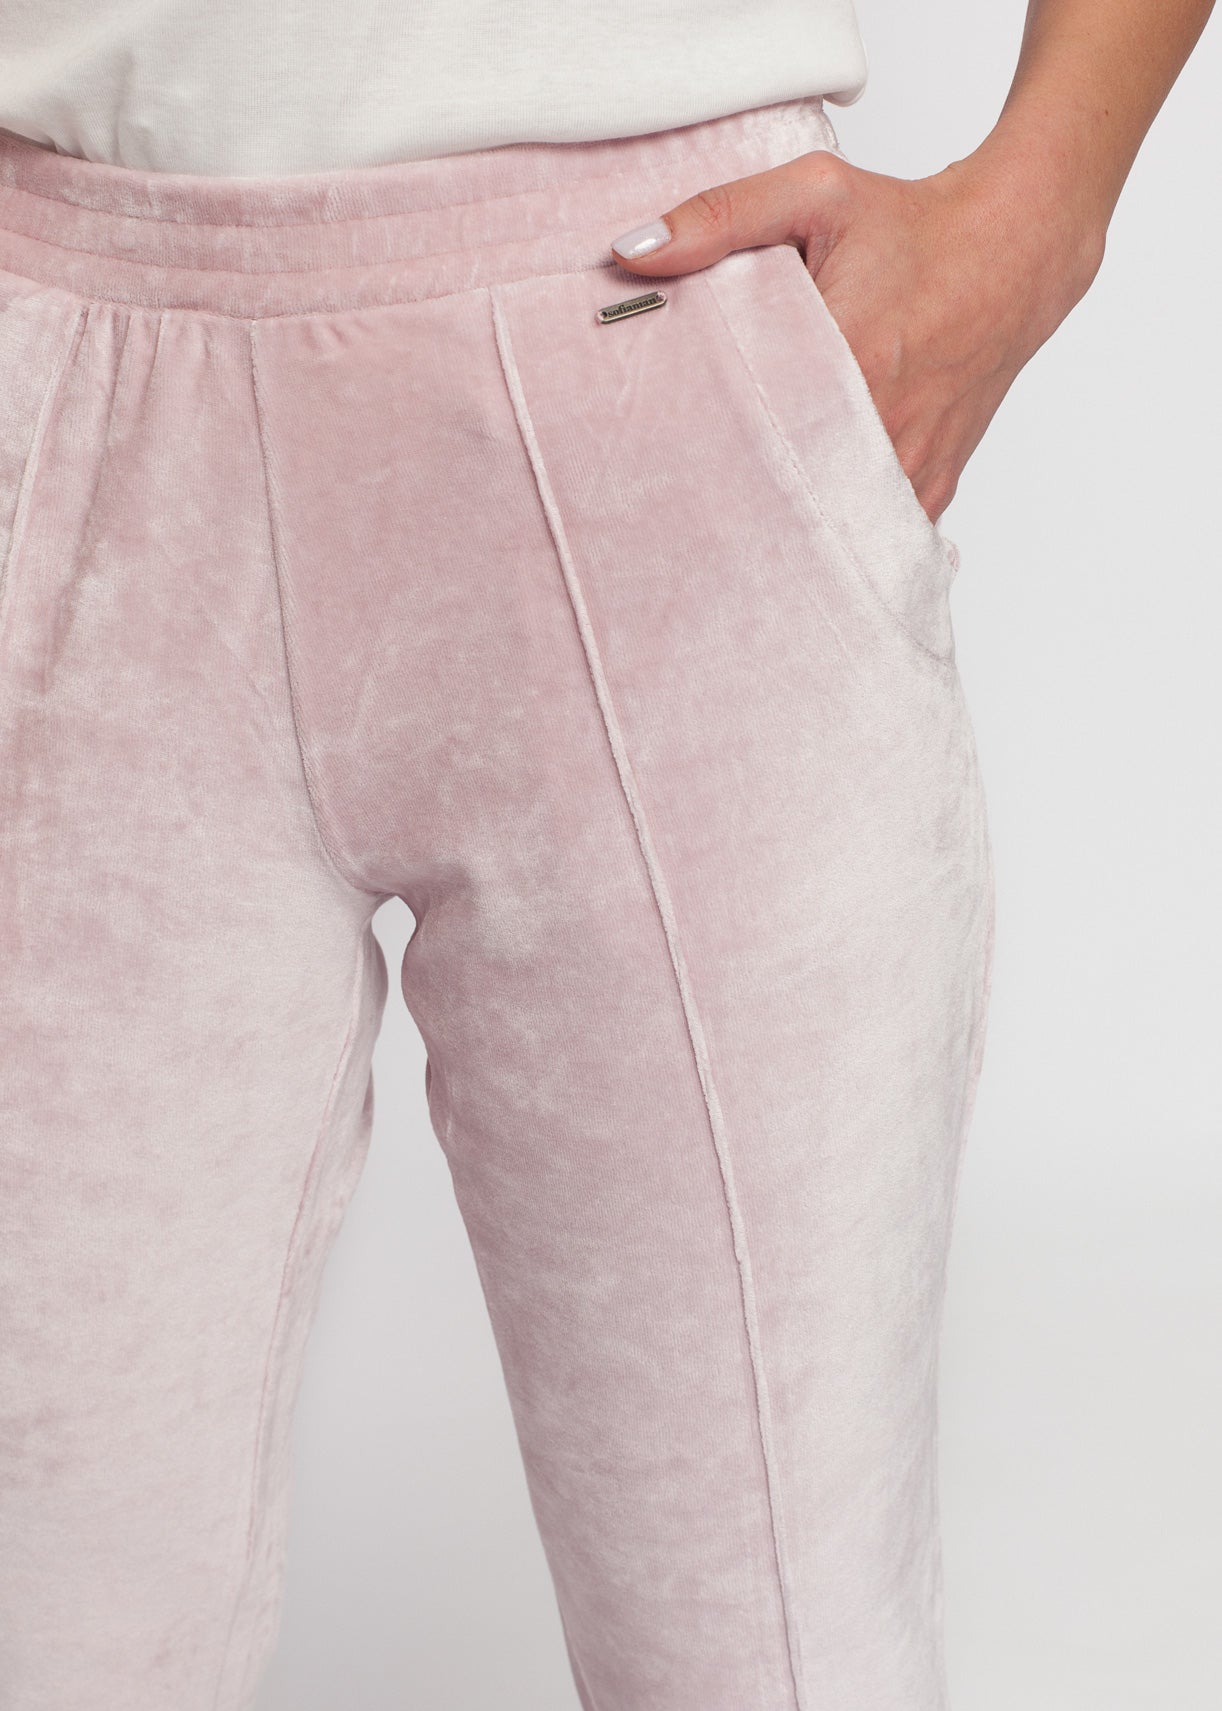 Pantaloni Damă Velvet Roz